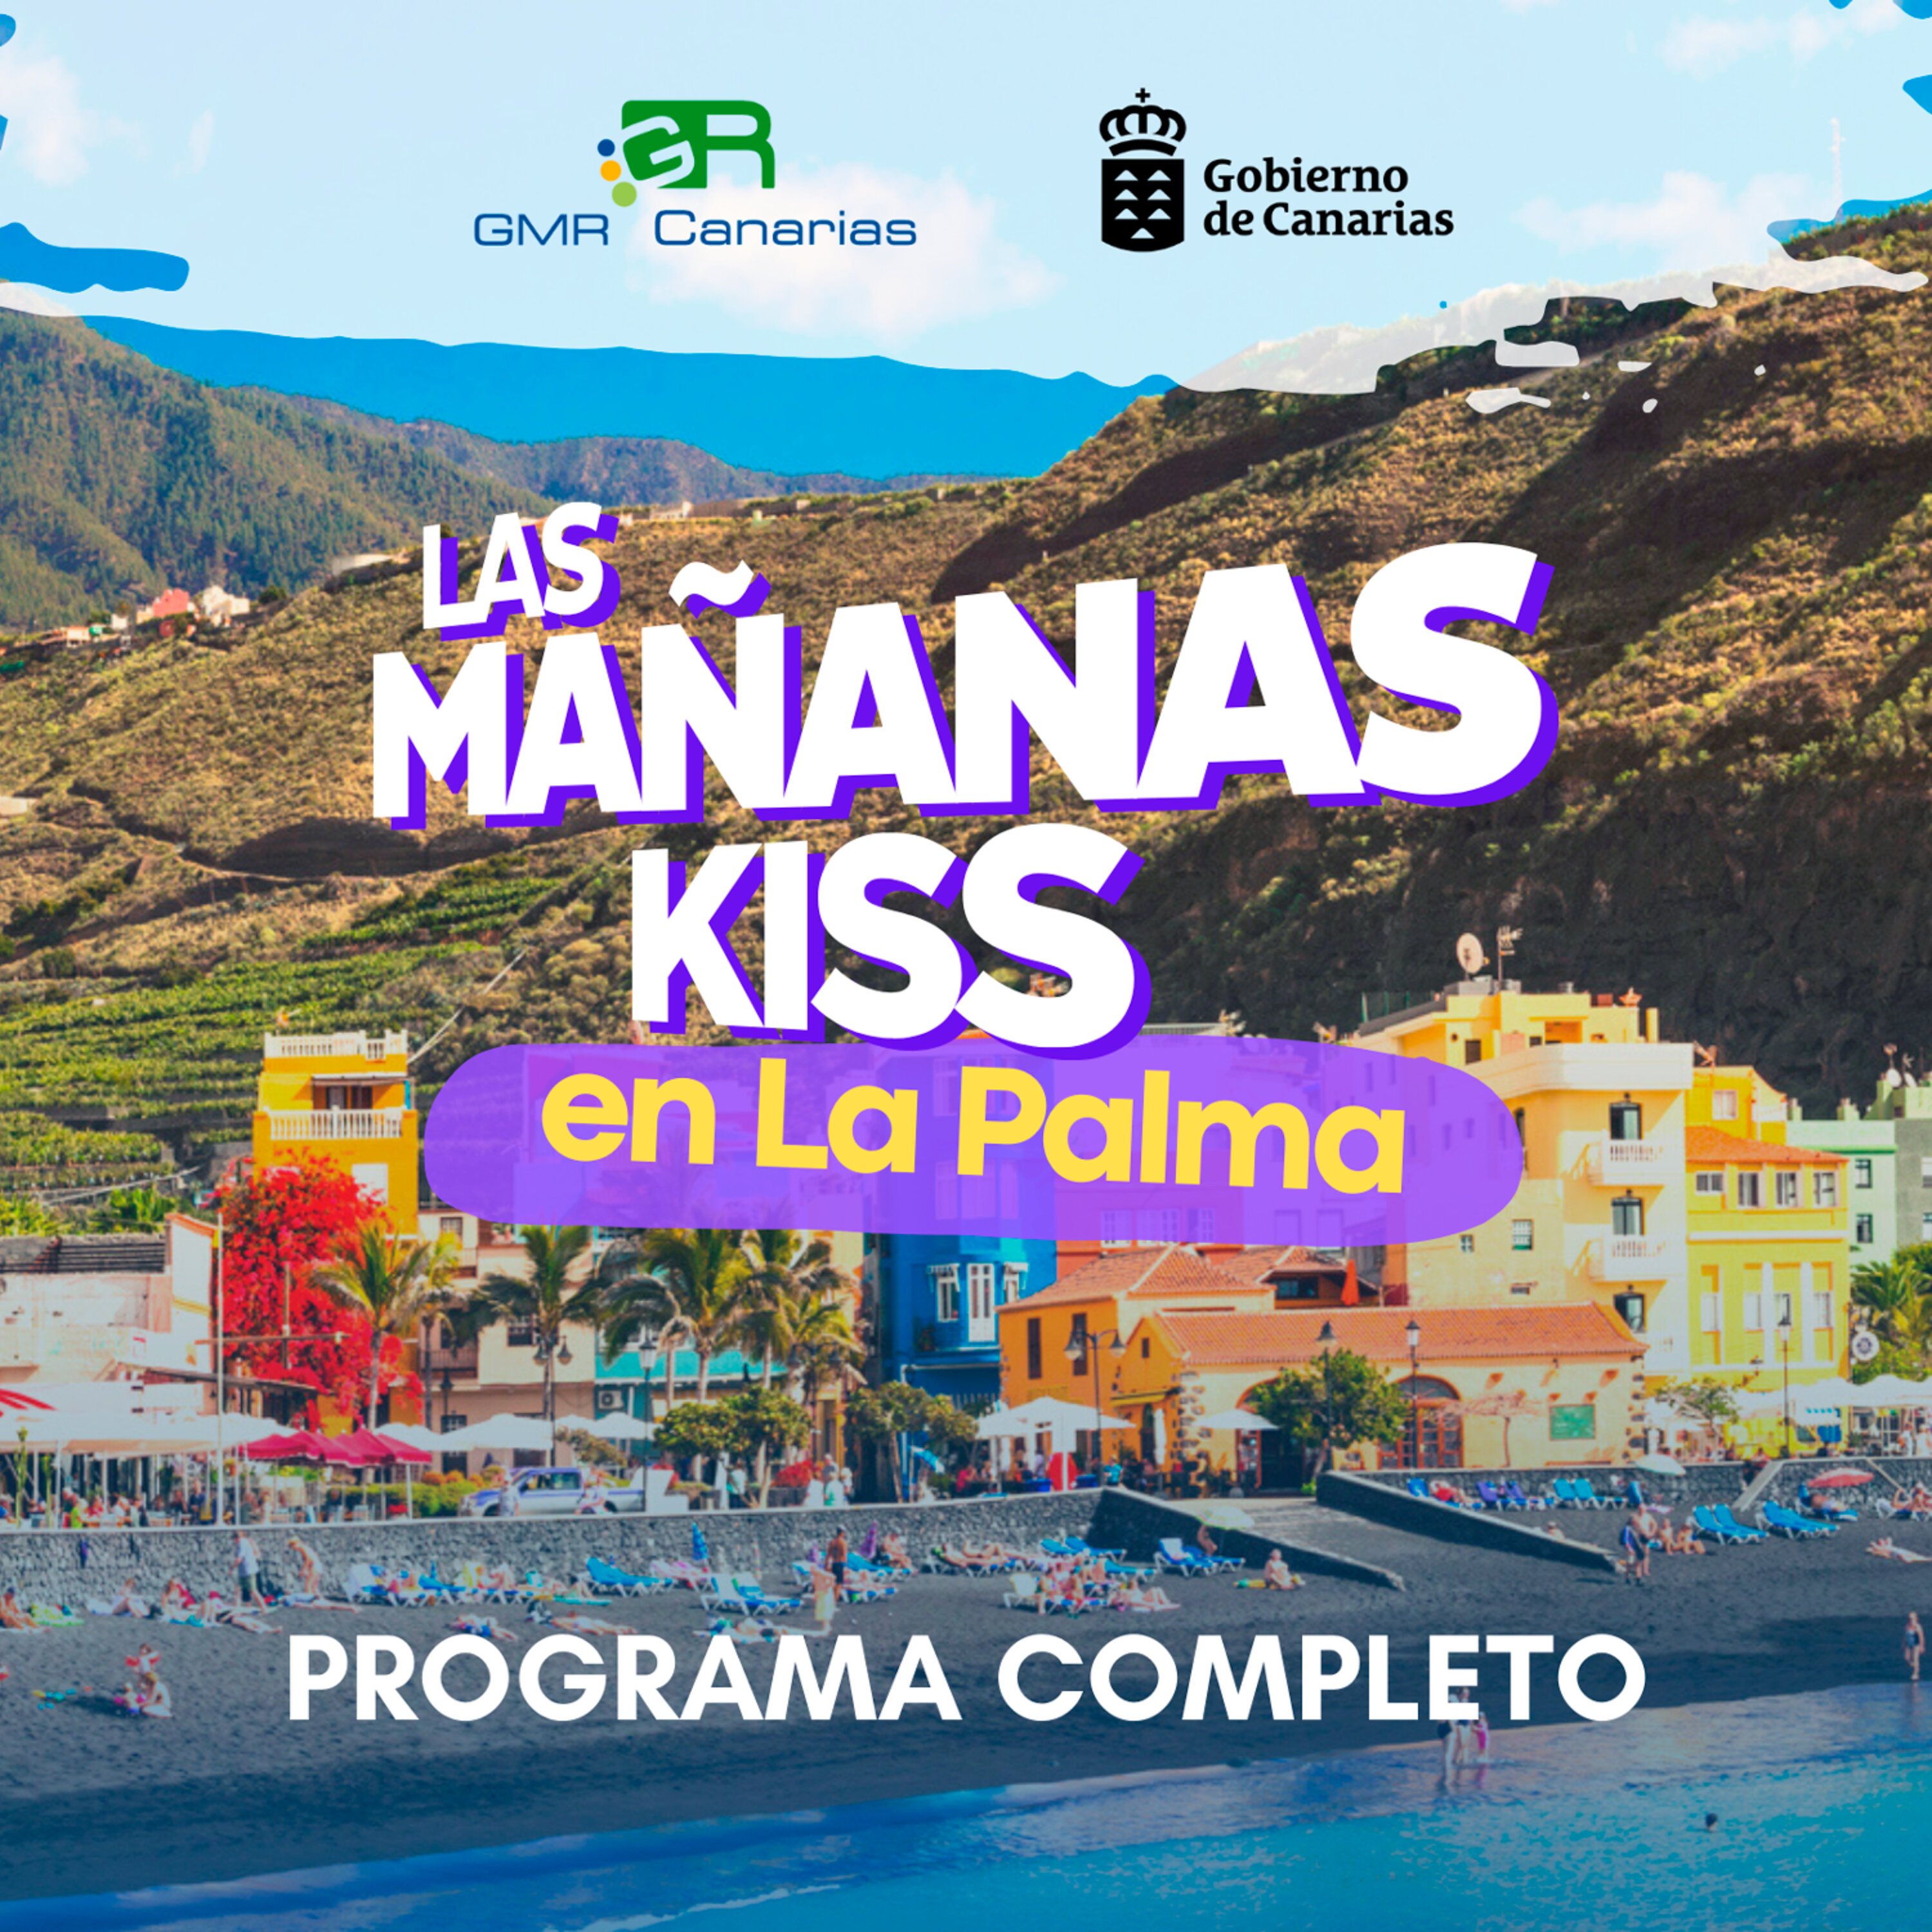 Las Mañanas Kiss desde La Palma (01/04/2022 – 07-08h)